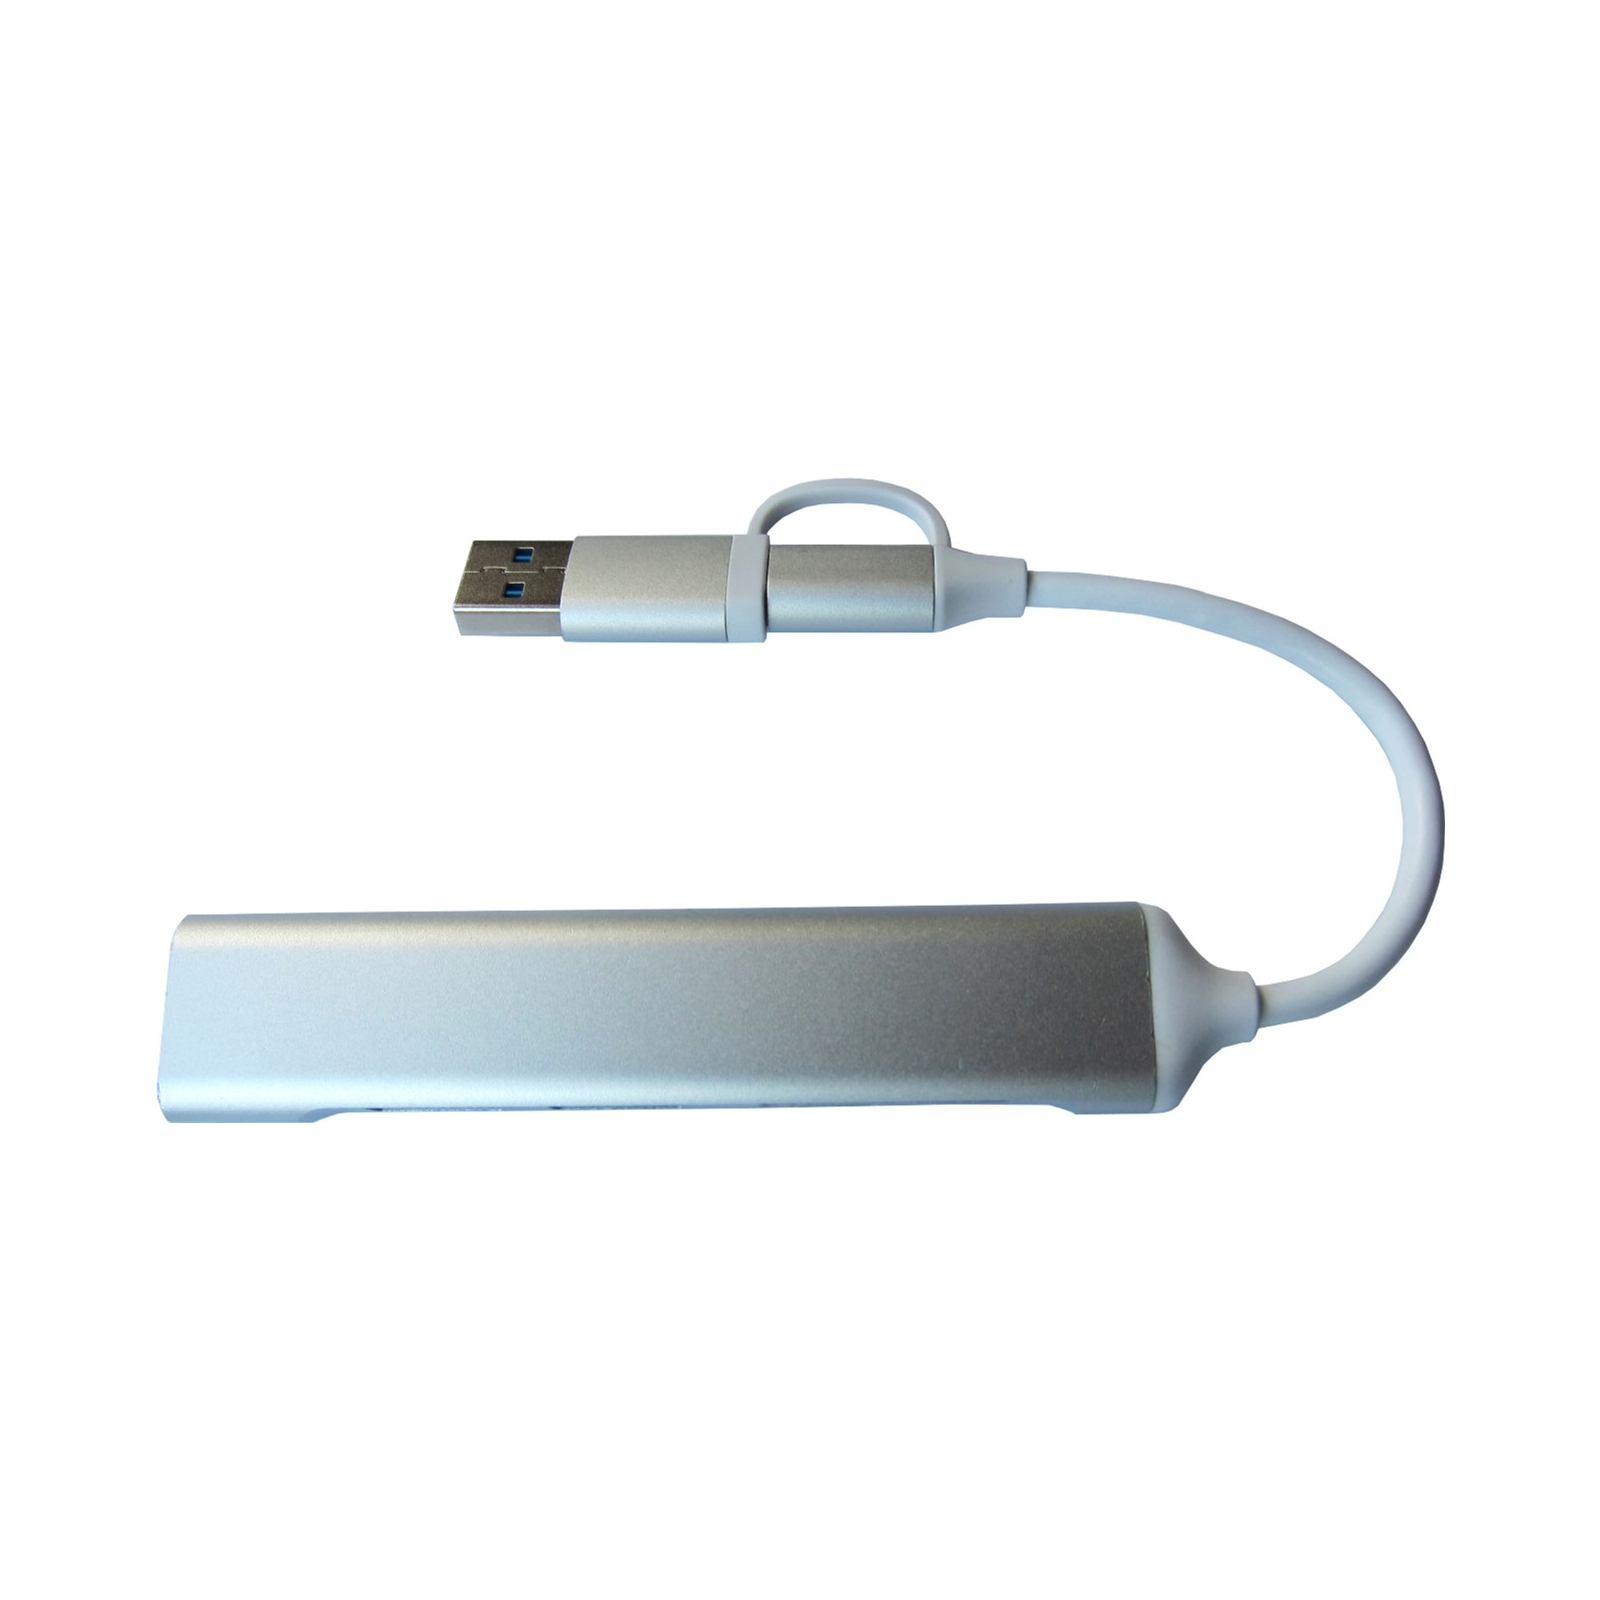 Концентратор Dynamode 5-in-1 USB Type-C/Type-A to 1хUSB3.0, 2xUSB 2.0, card-reader SD/MicroSD (DM-UH-518) изображение 2